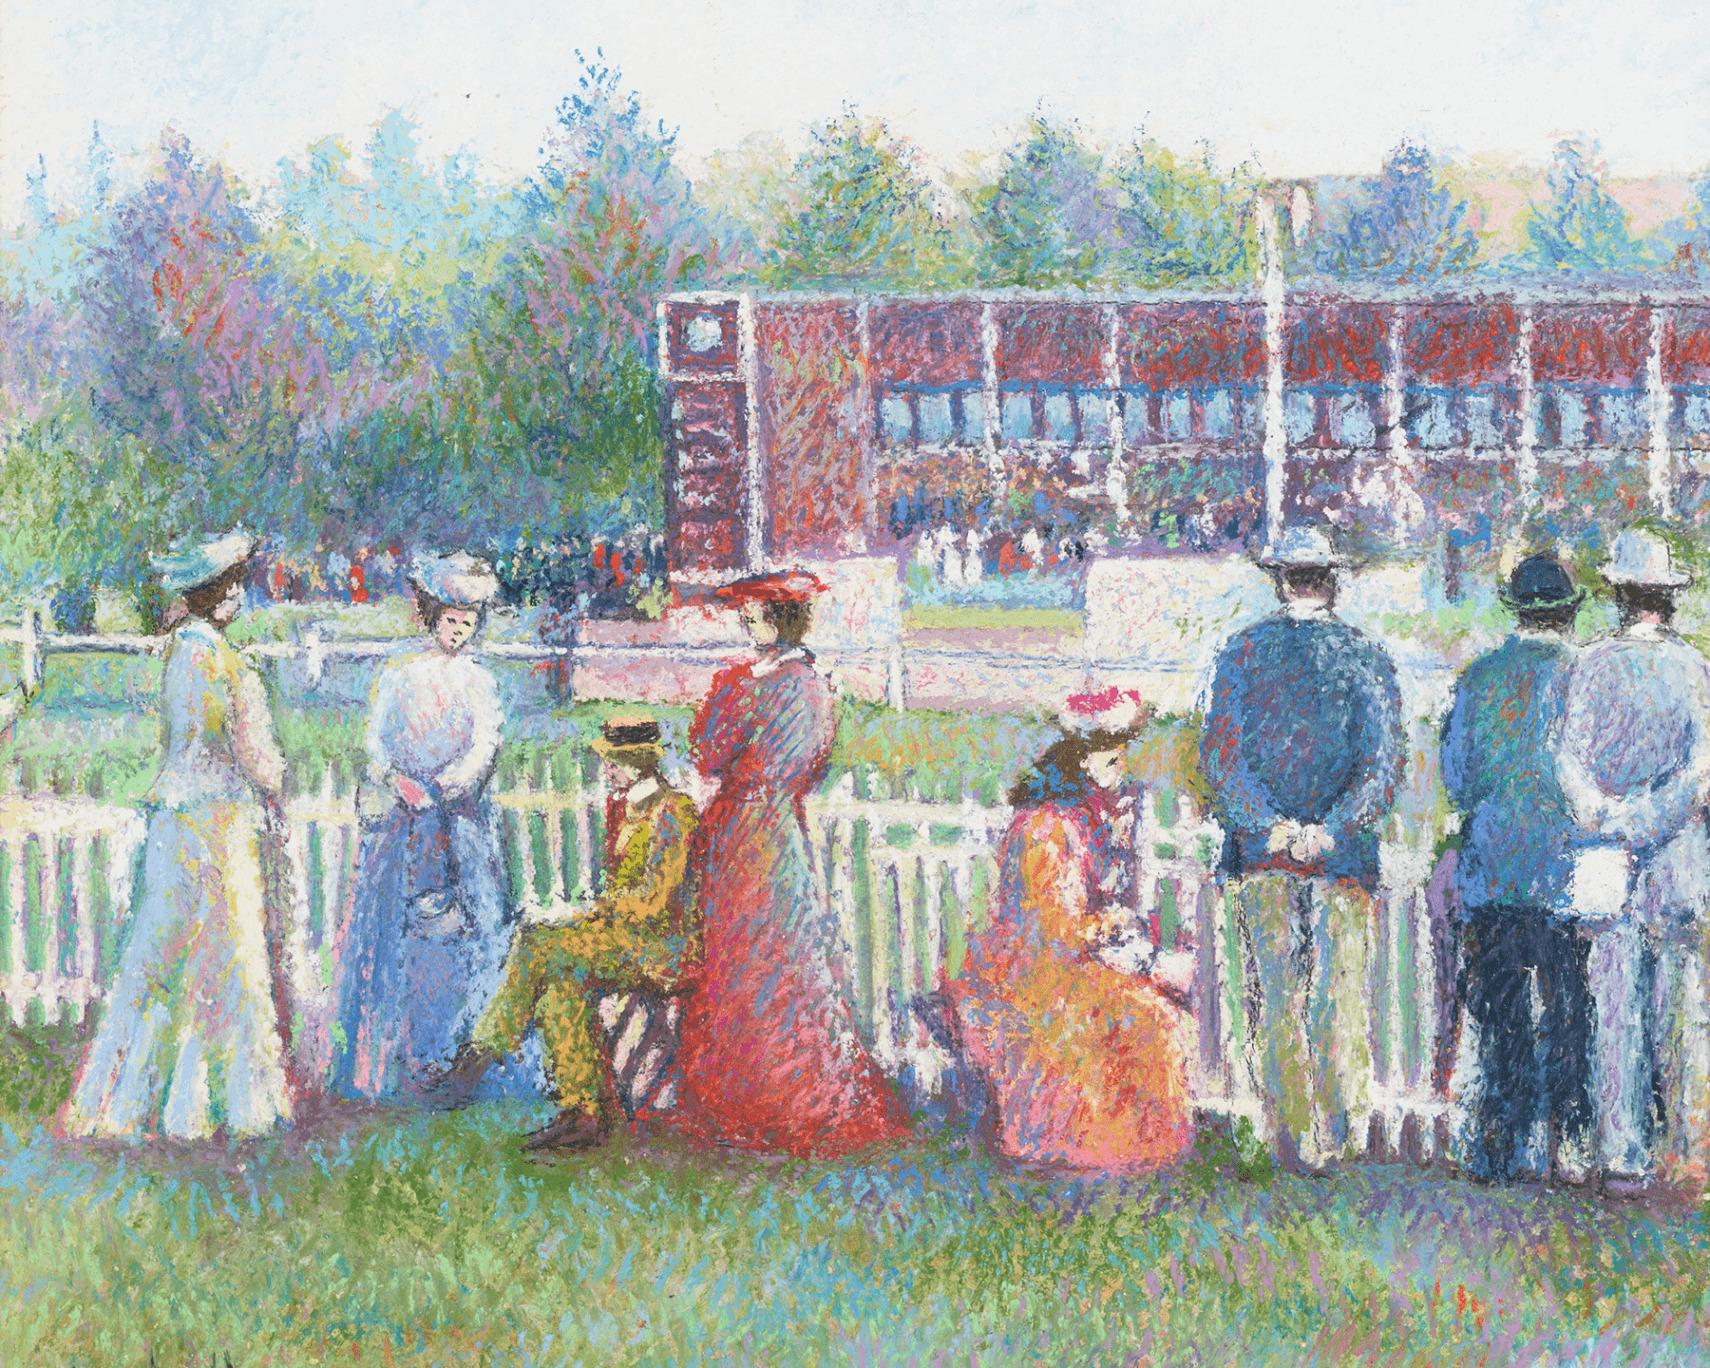 Dimanche au Champ de Course (Deauville) (Sunday at the Racetrack) - Post-Impressionist Painting by Hughes Claude Pissarro